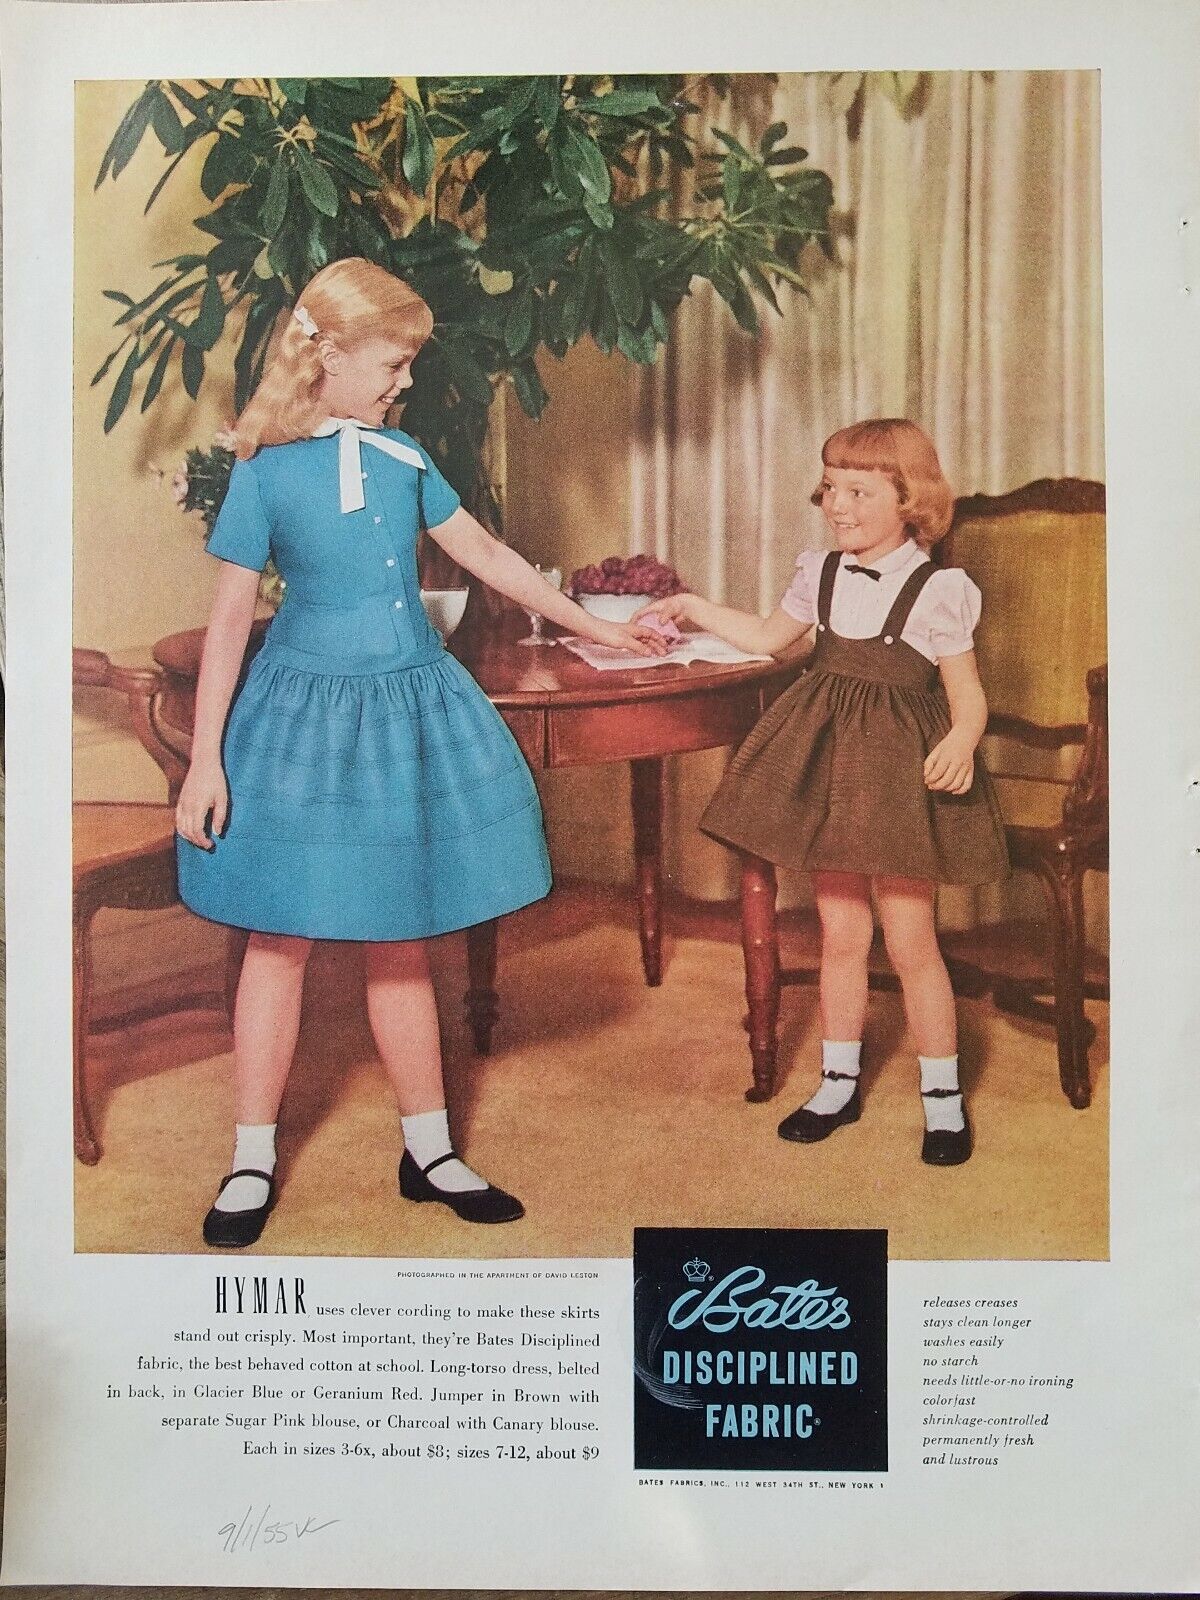 1955 Bates disciplined fabric little girls dresses Hymar vintage fashion ad